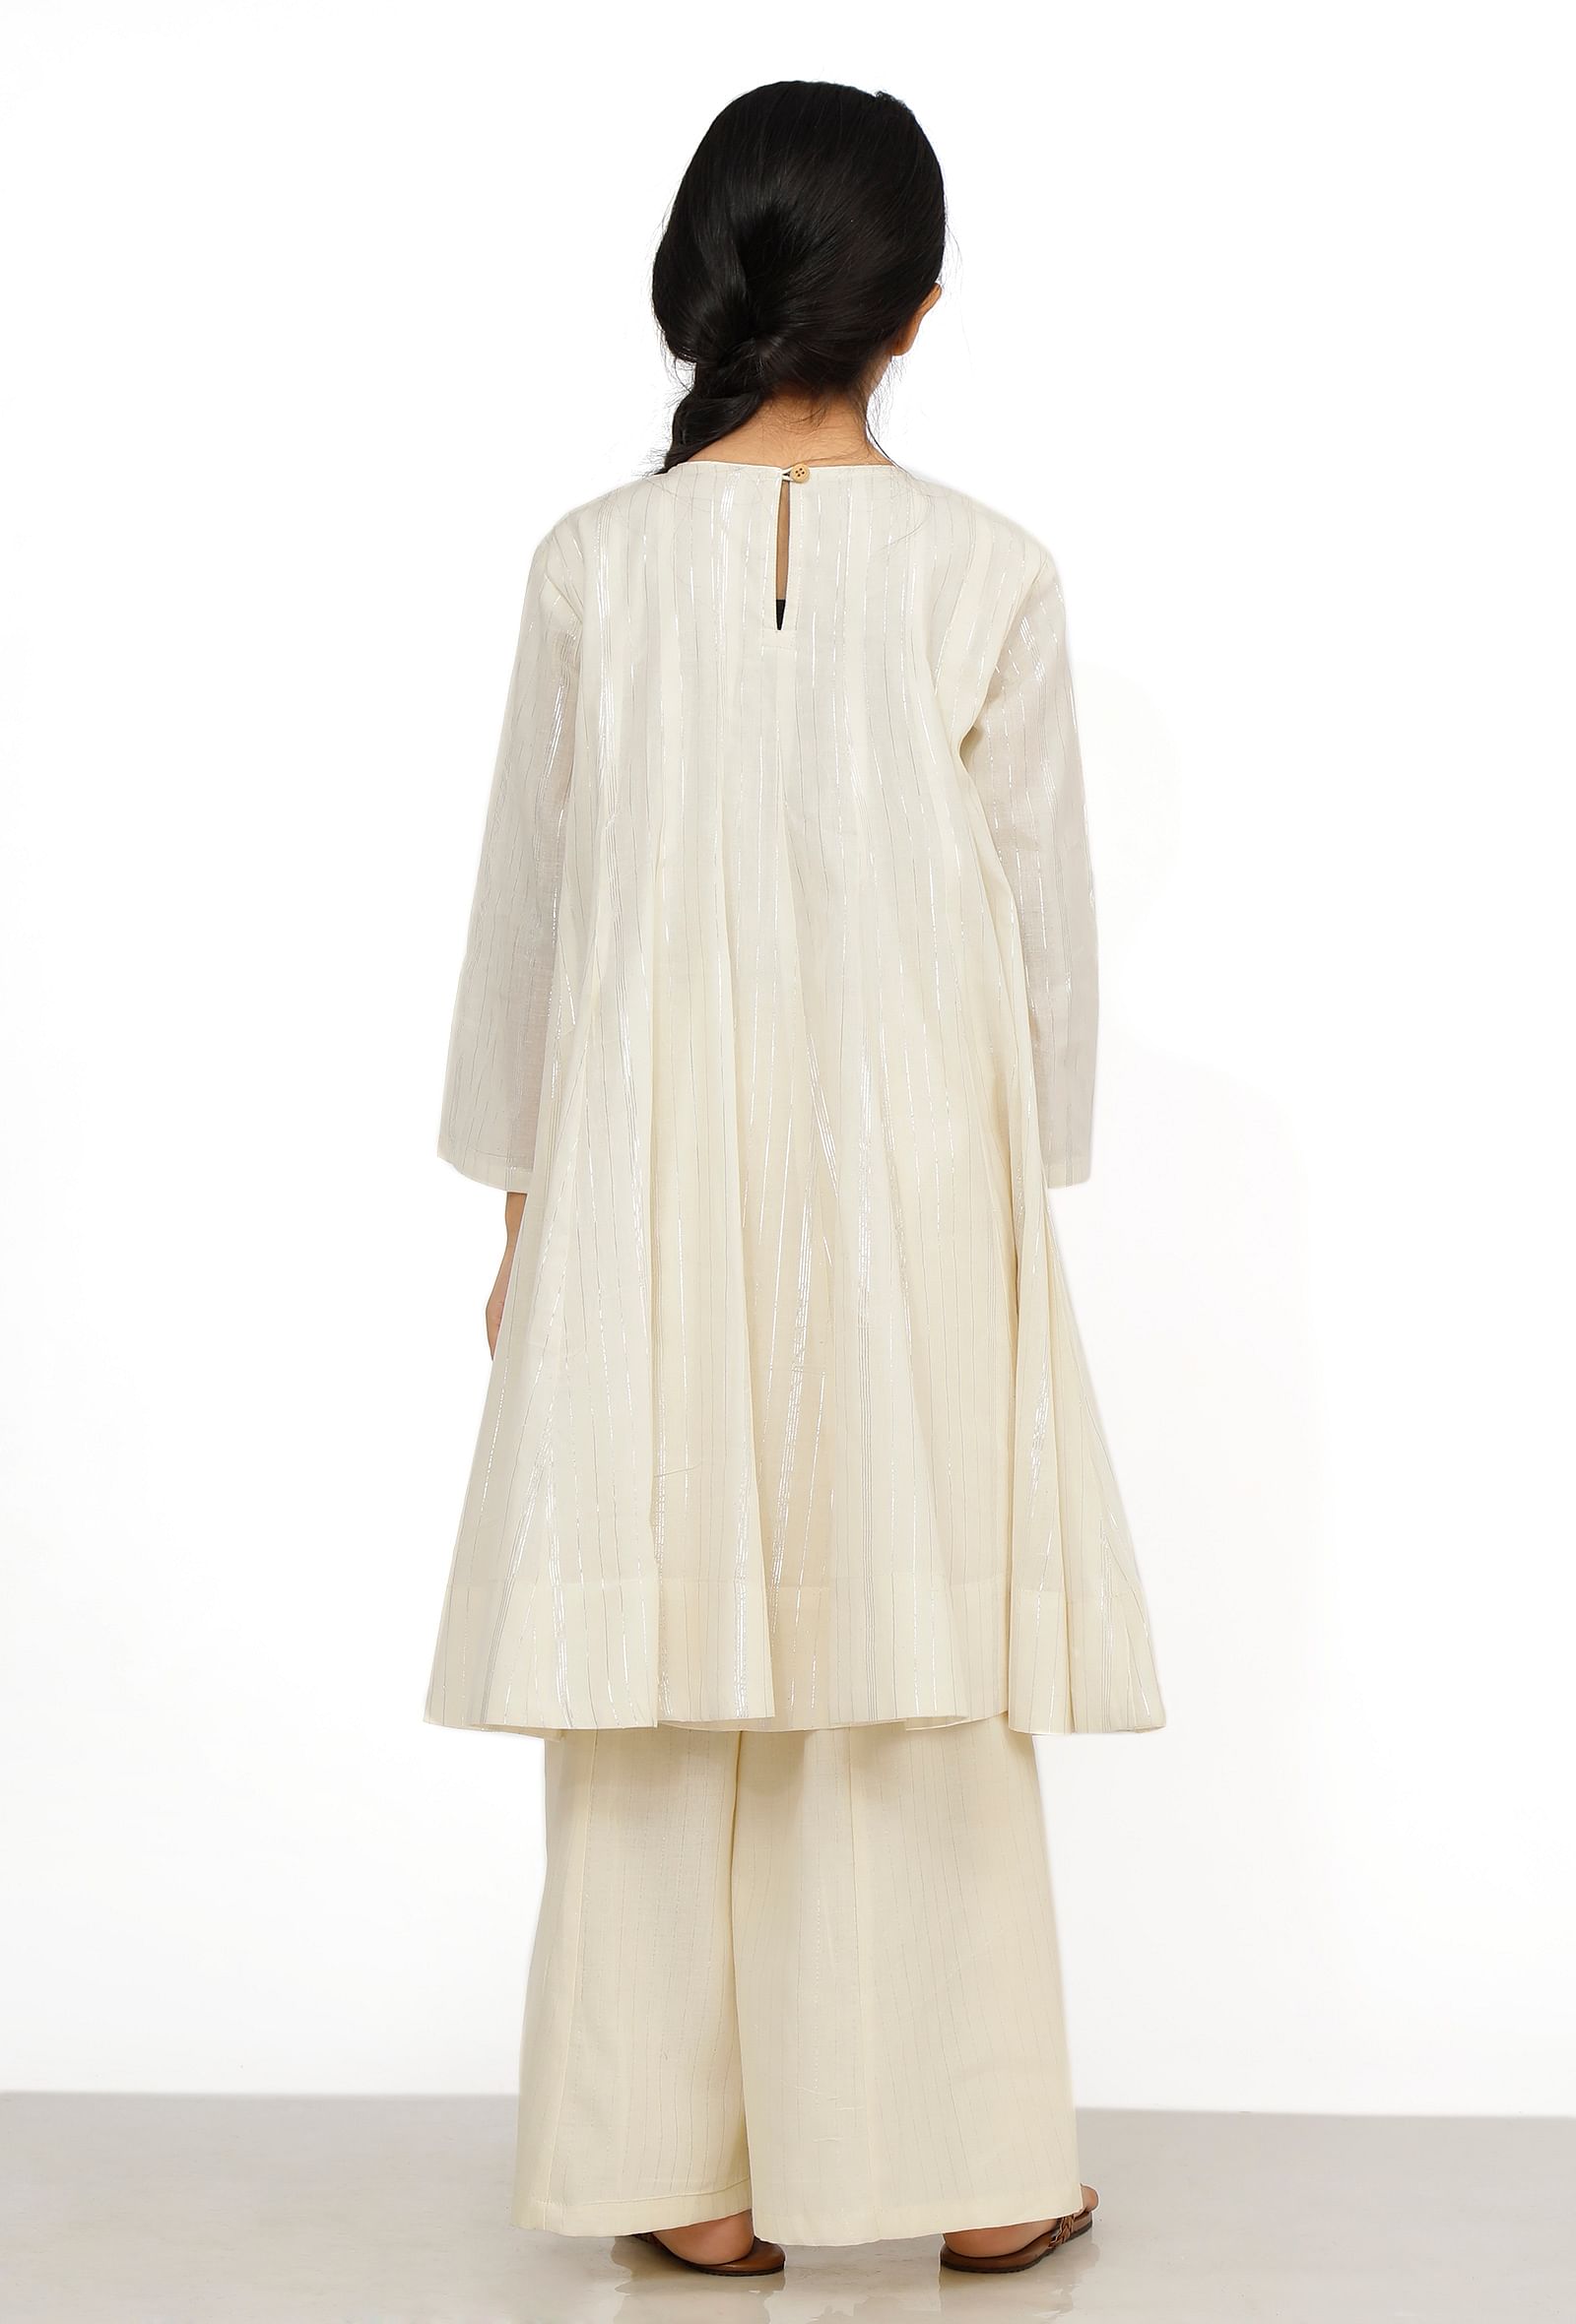 Set of 2: Noor White Cotton Anarkali Kurti with Flared Pants